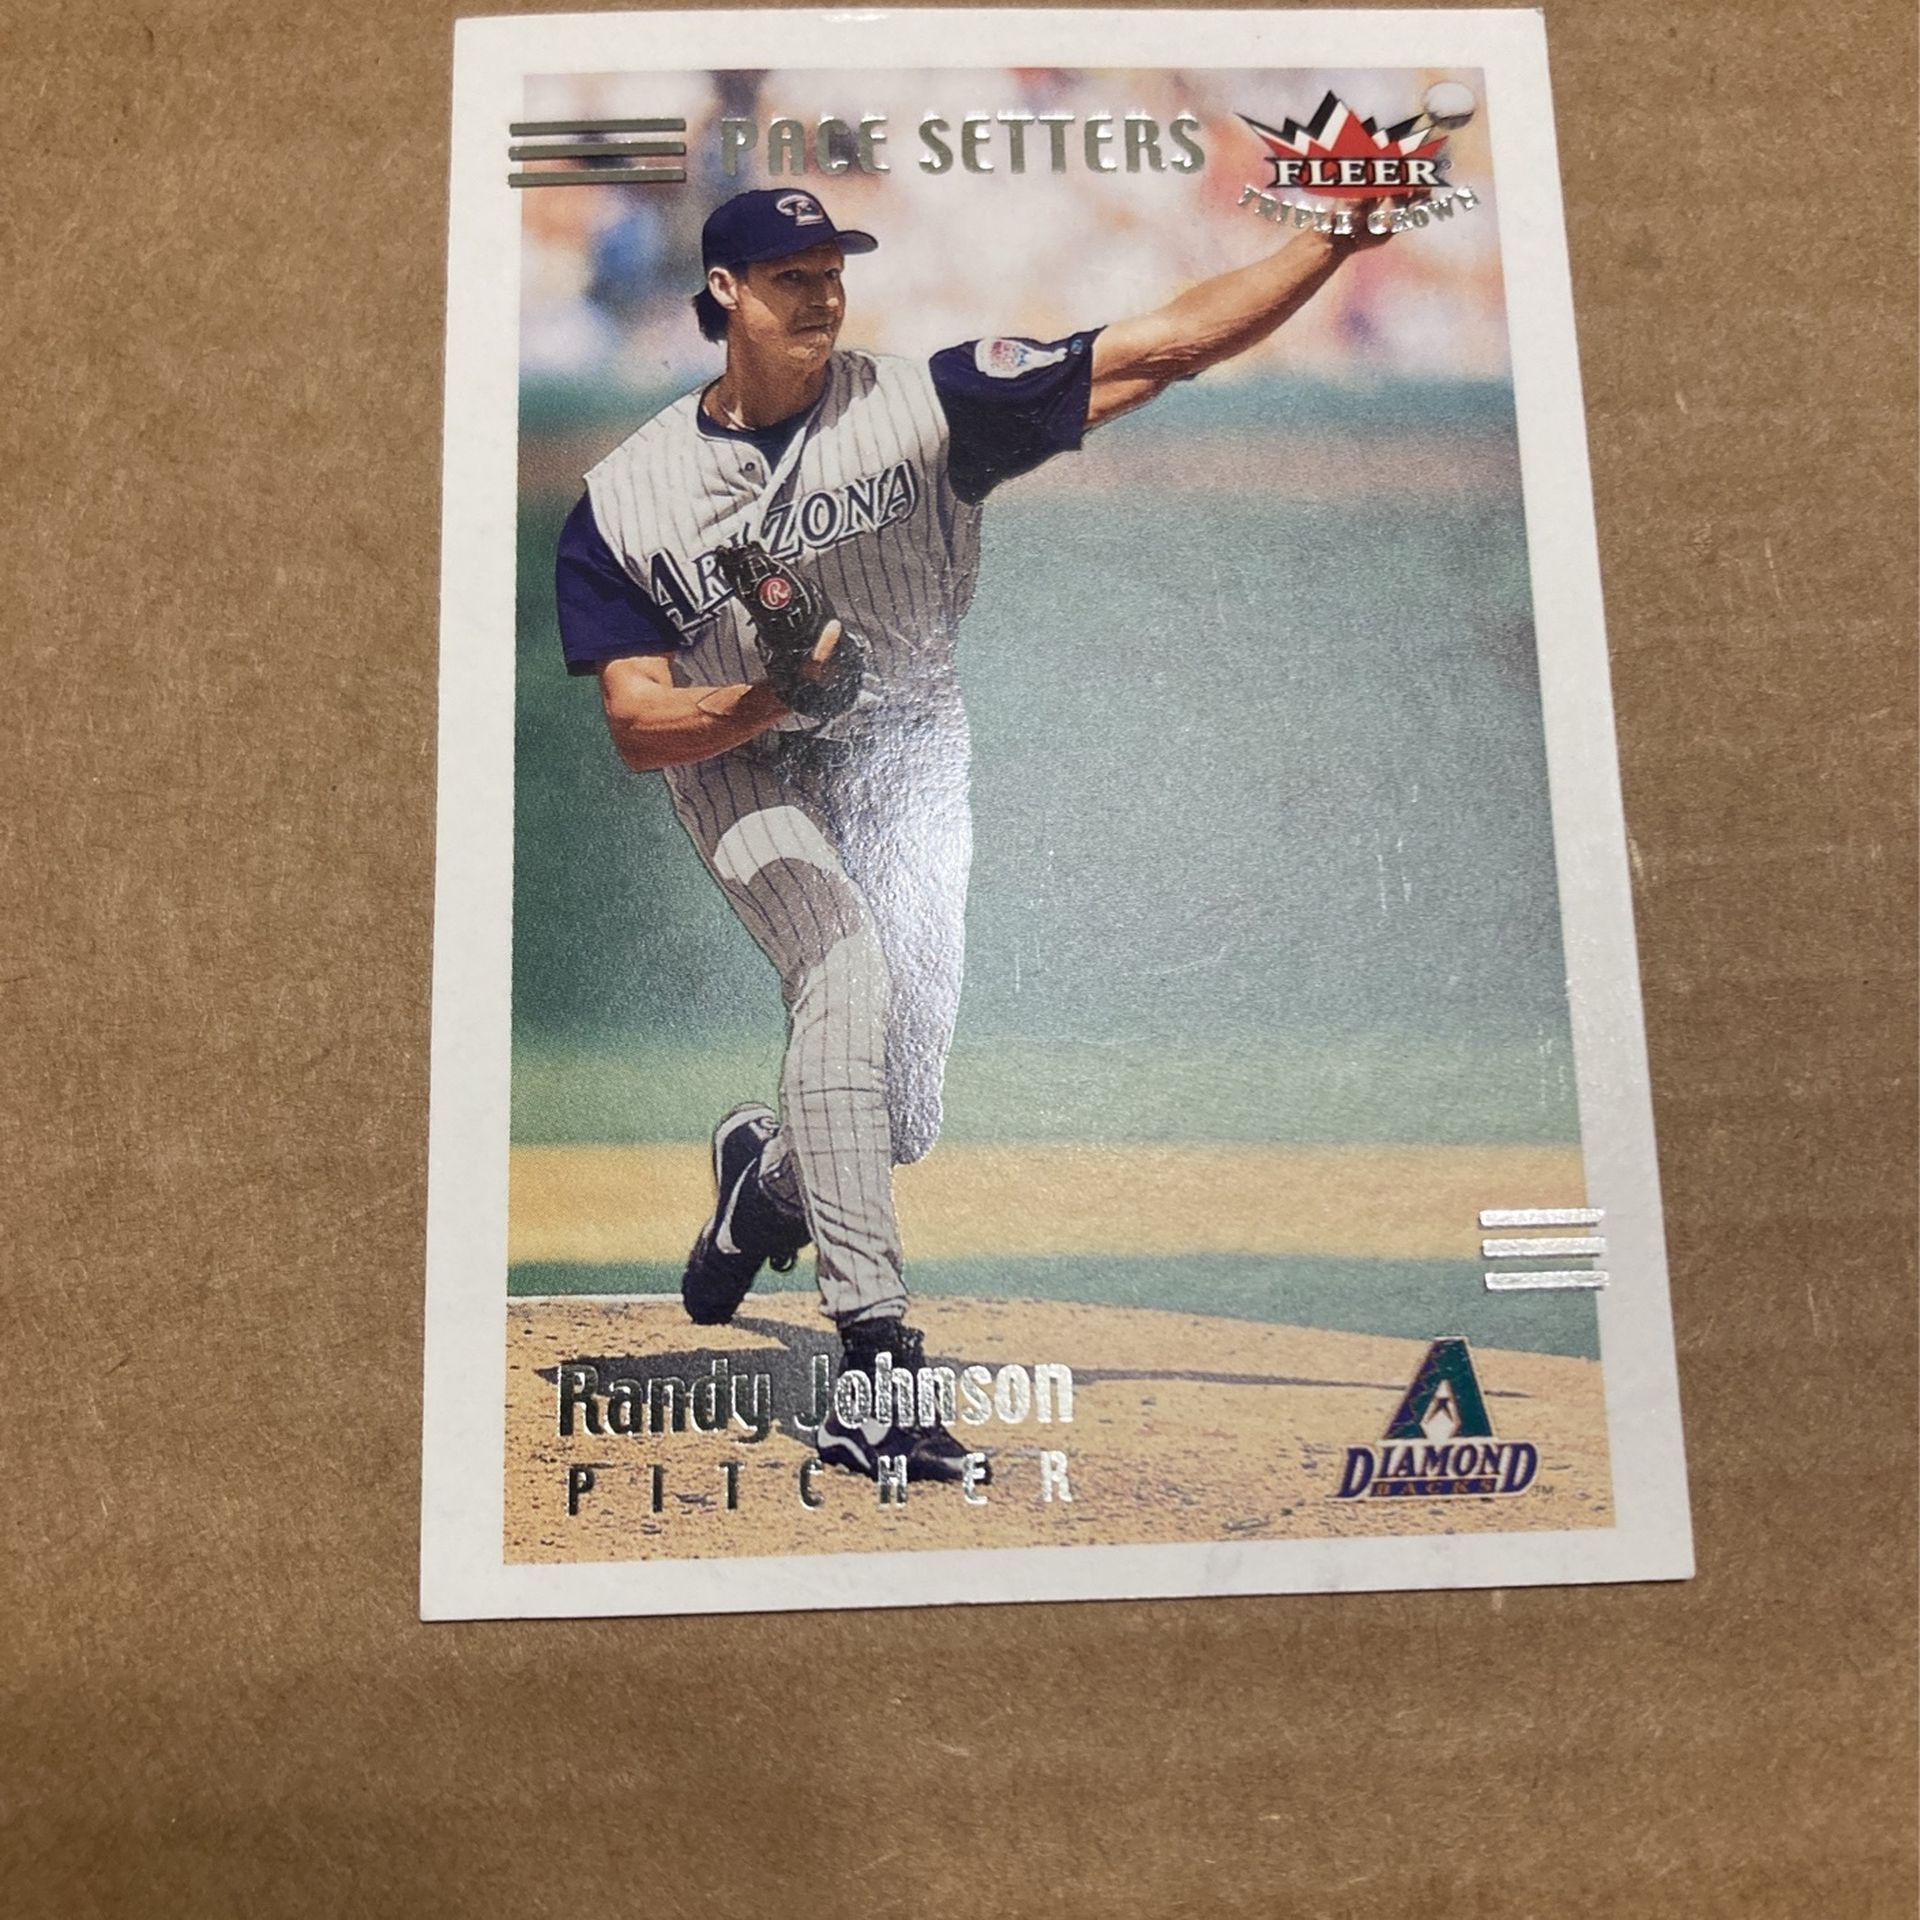 Randy Johnson Baseball Card for Sale in Gilbert, AZ - OfferUp